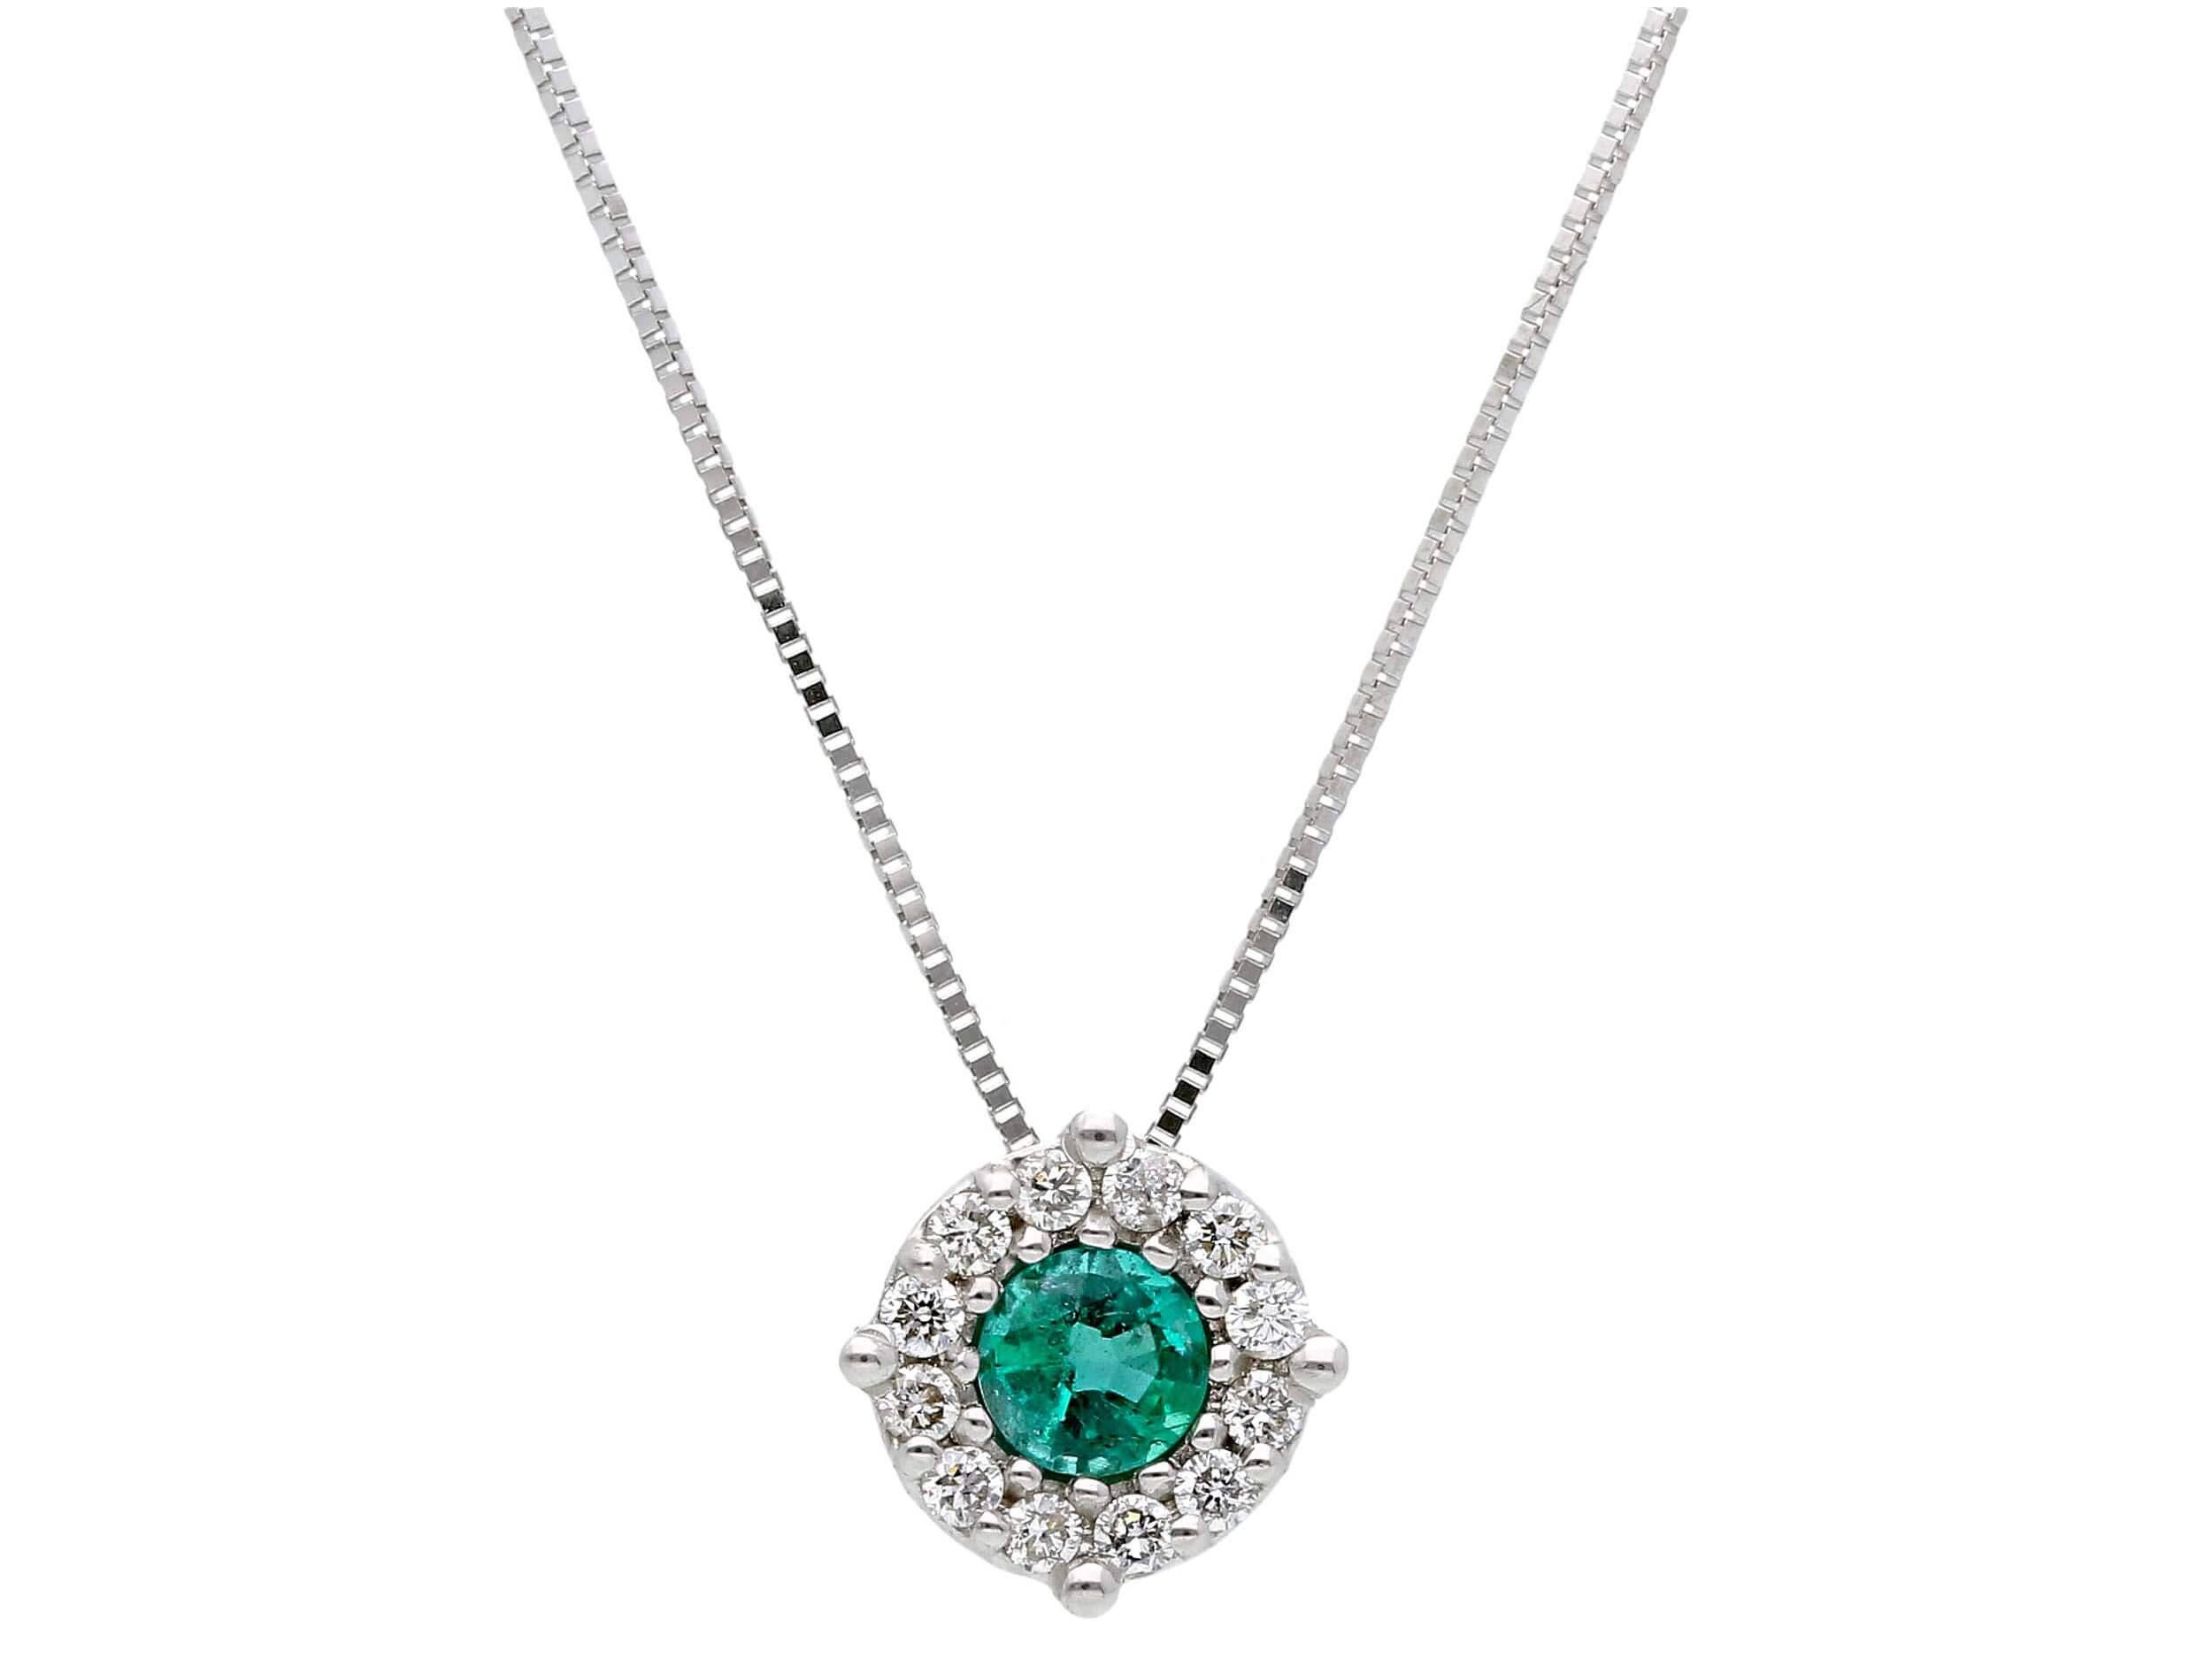 Gold Emerald Pendant 750% and BELLE EPOQUE Diamonds Art. 264176SB